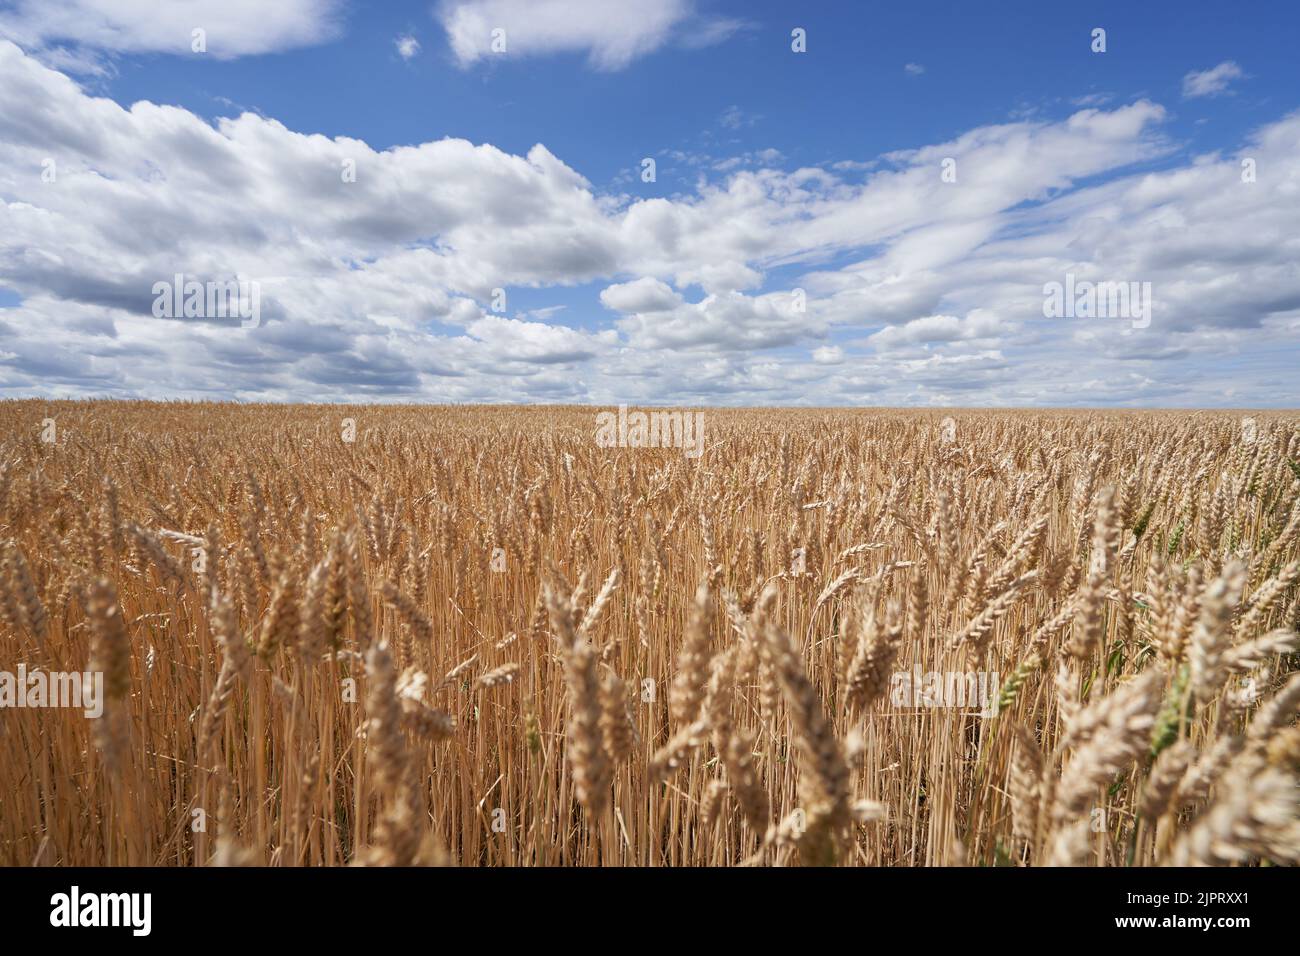 Ripe ears of wheat in field against a blue sky in Russia Stock Photo